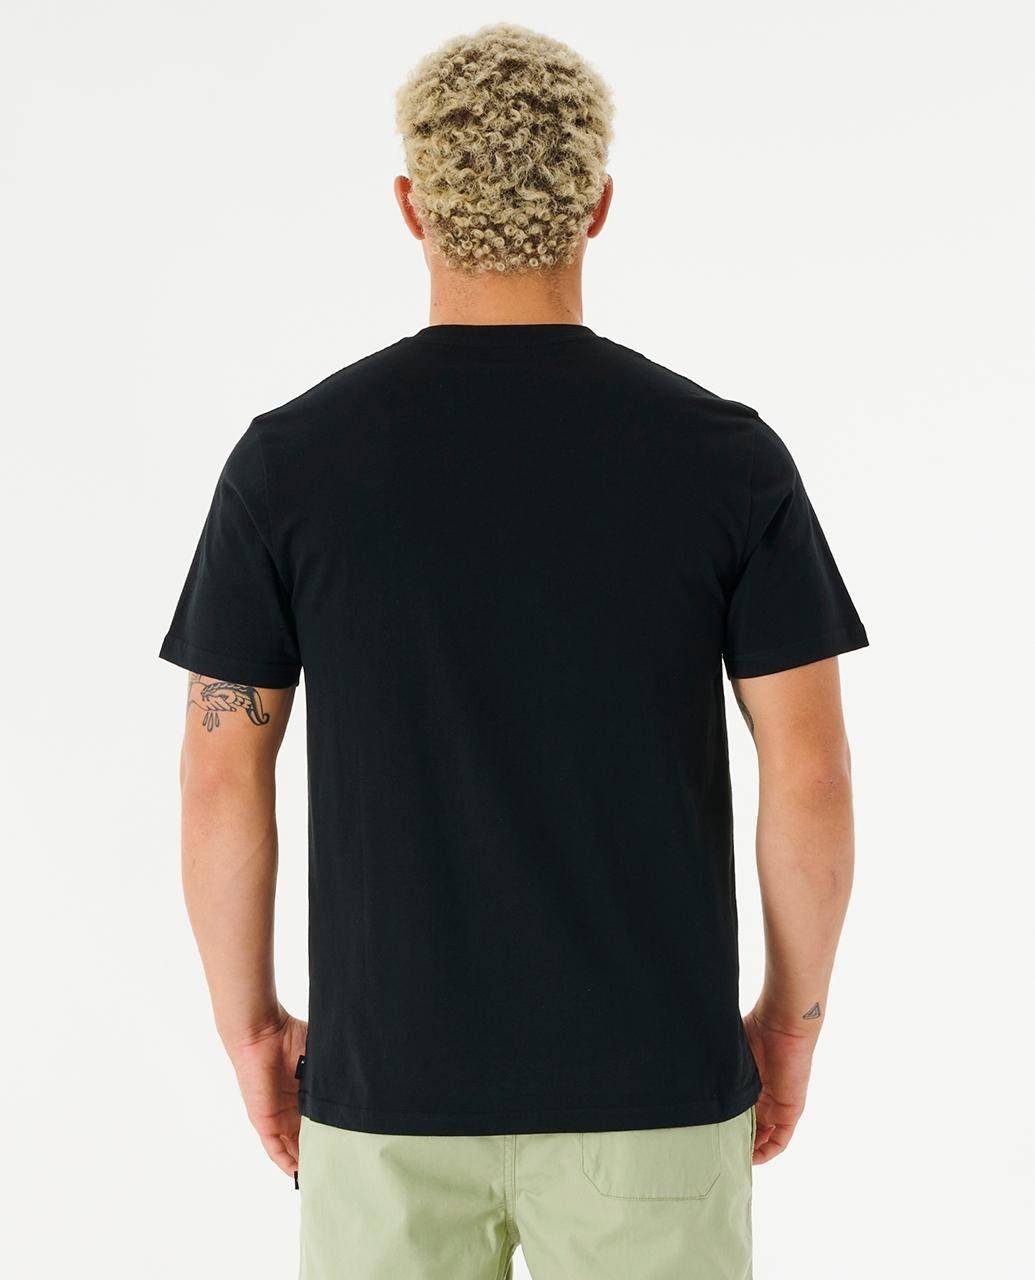 Print-Shirt Curl Rip Surf Waving T-Shirt Revival